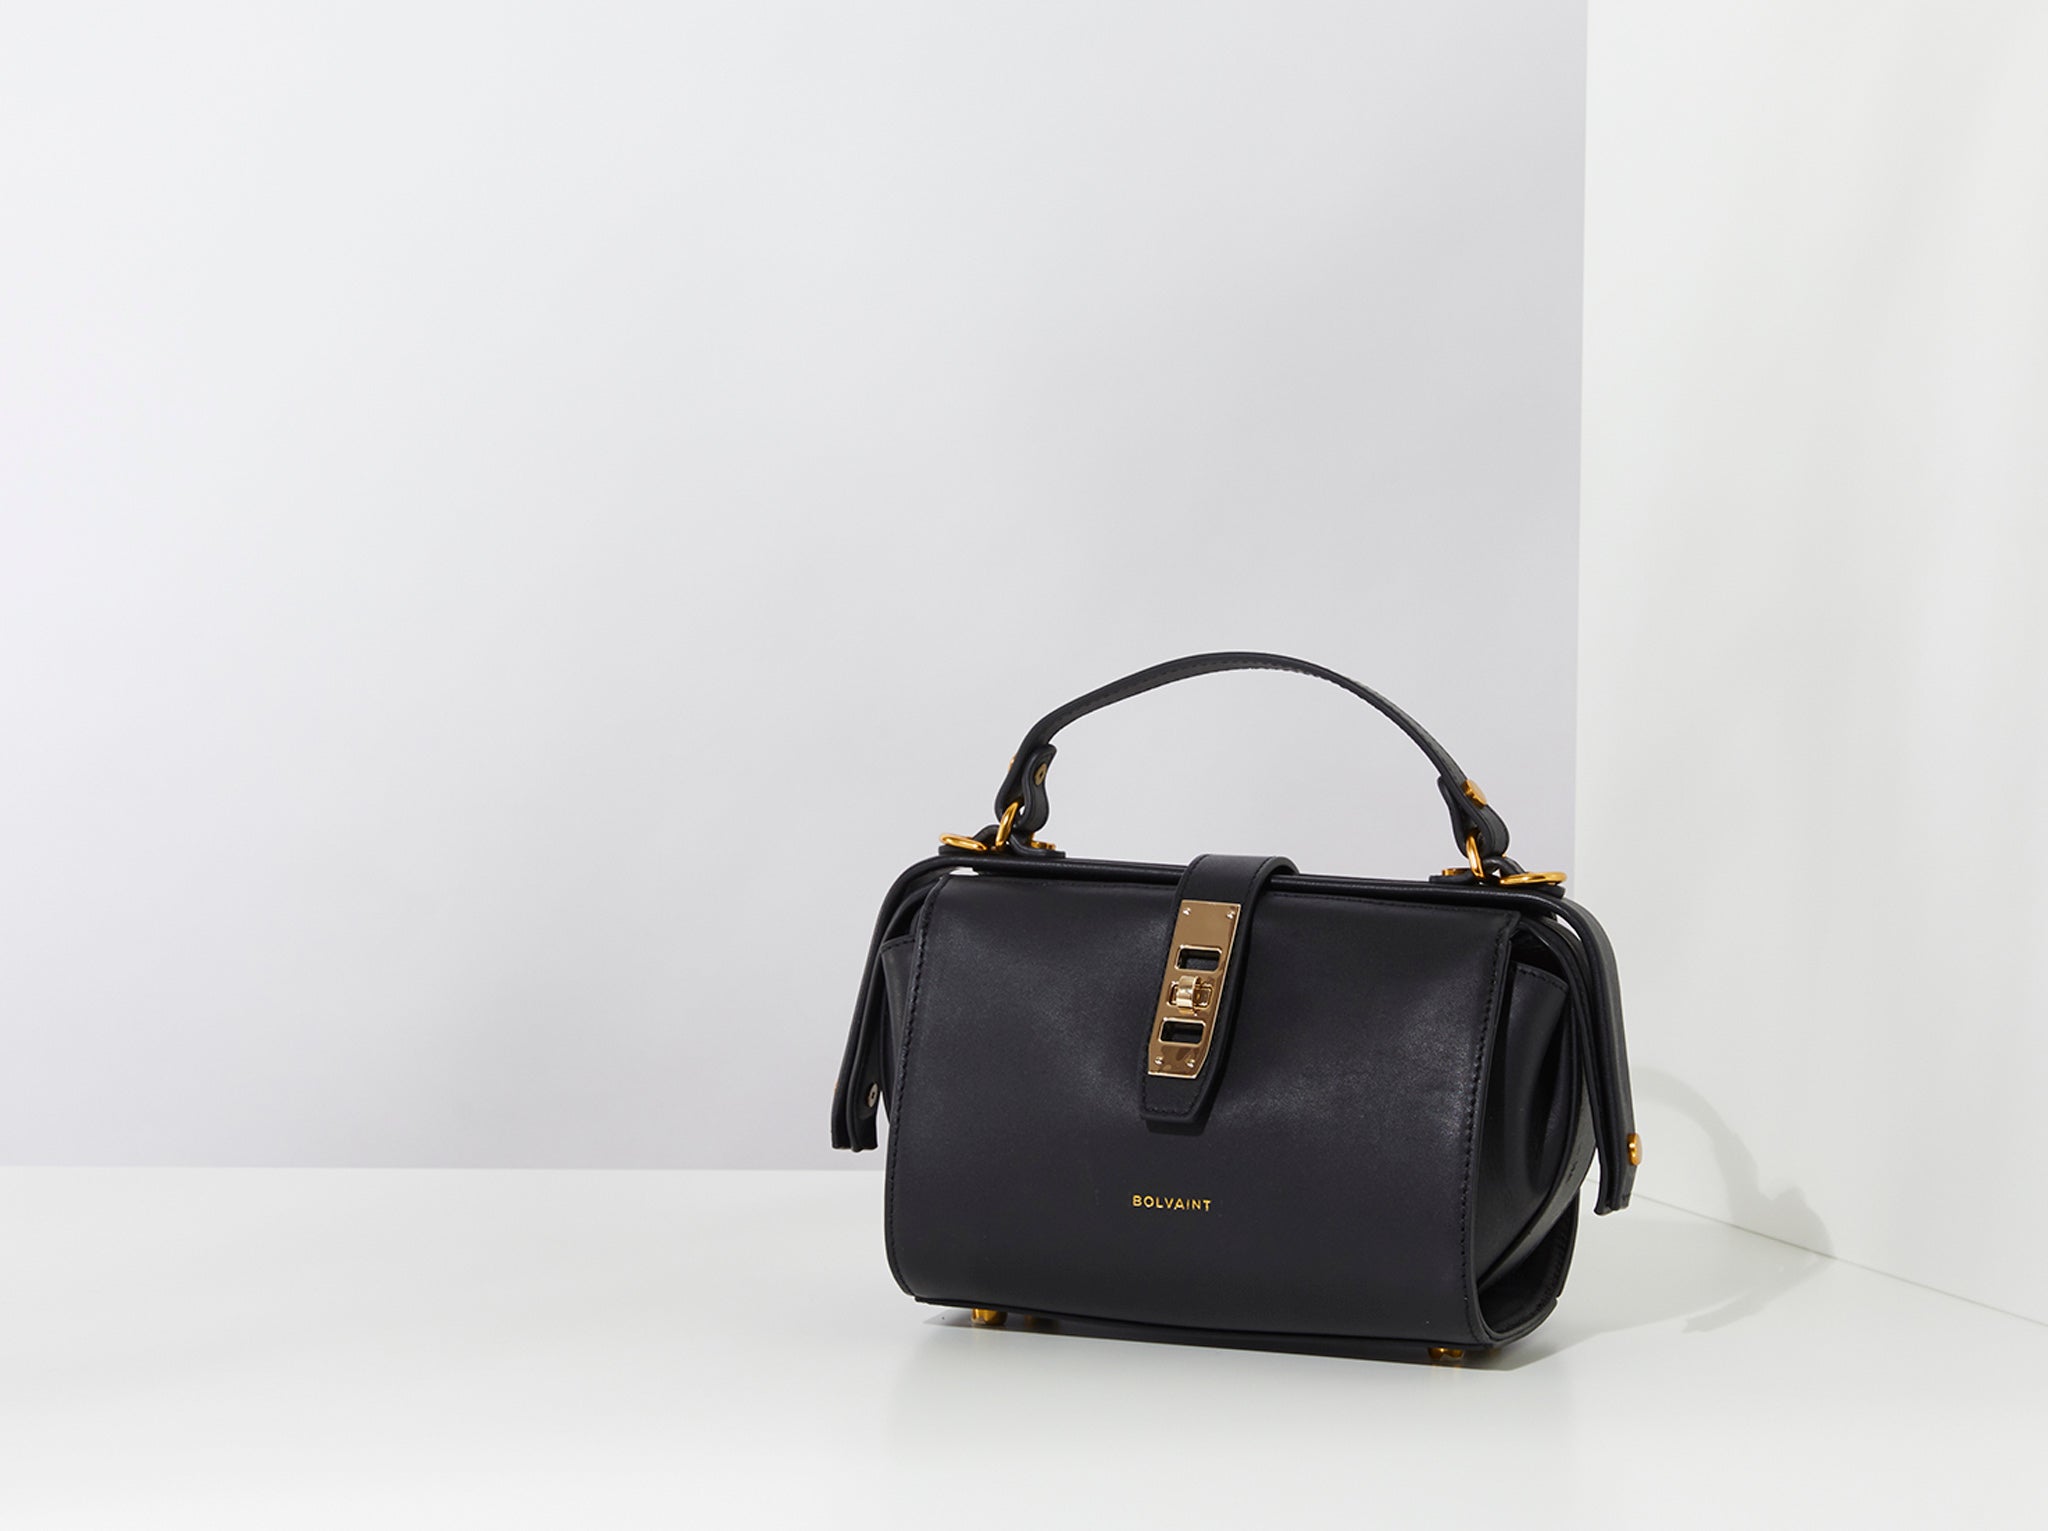 The Eloise Noir Clasped Bag